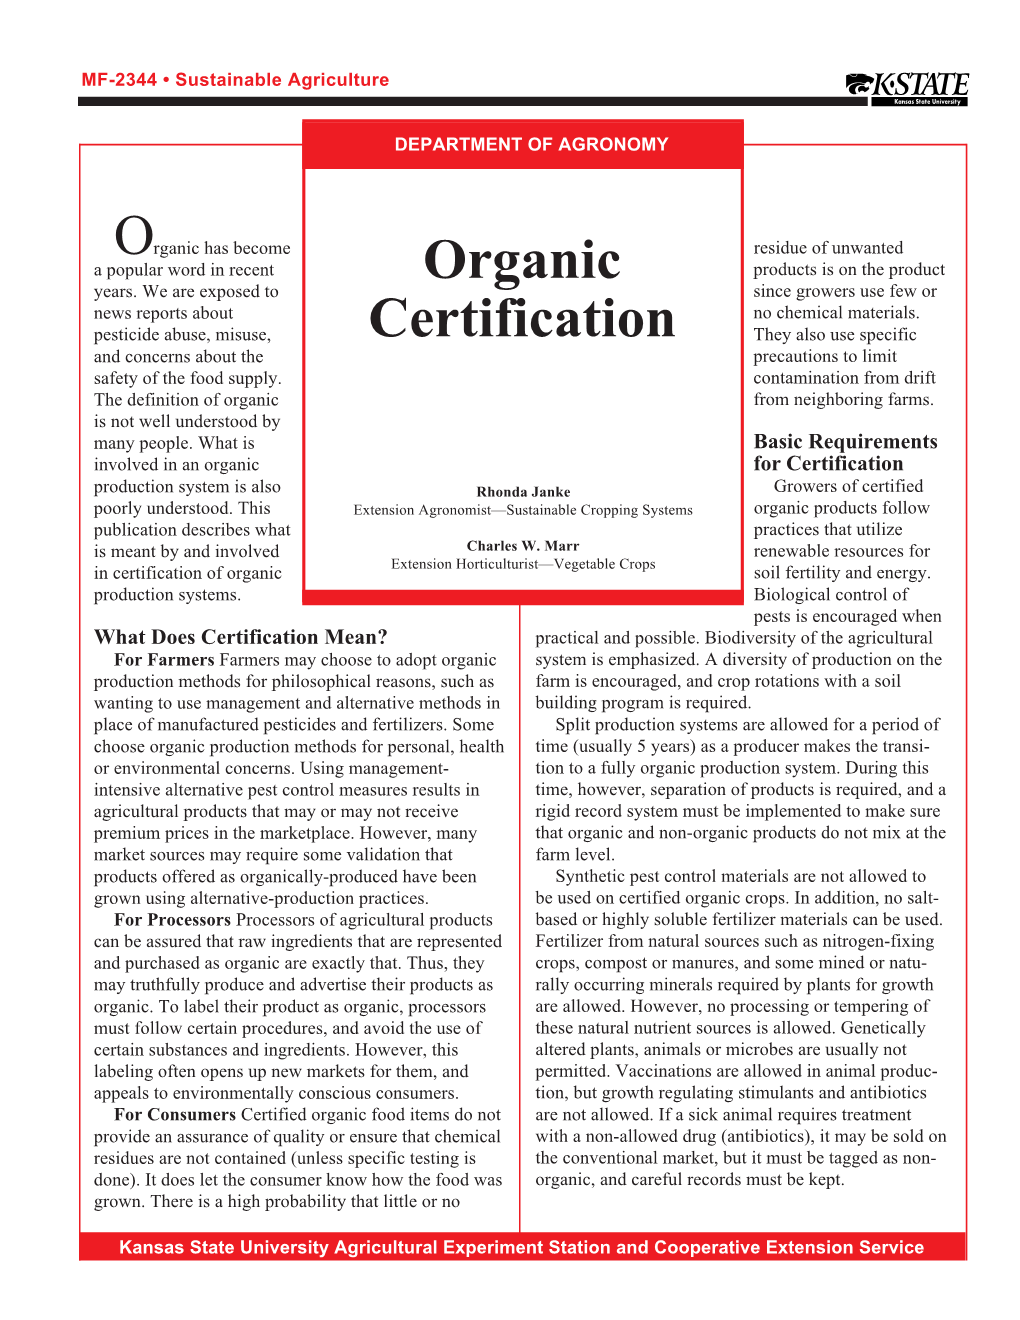 Organic Certification Standards Is Present